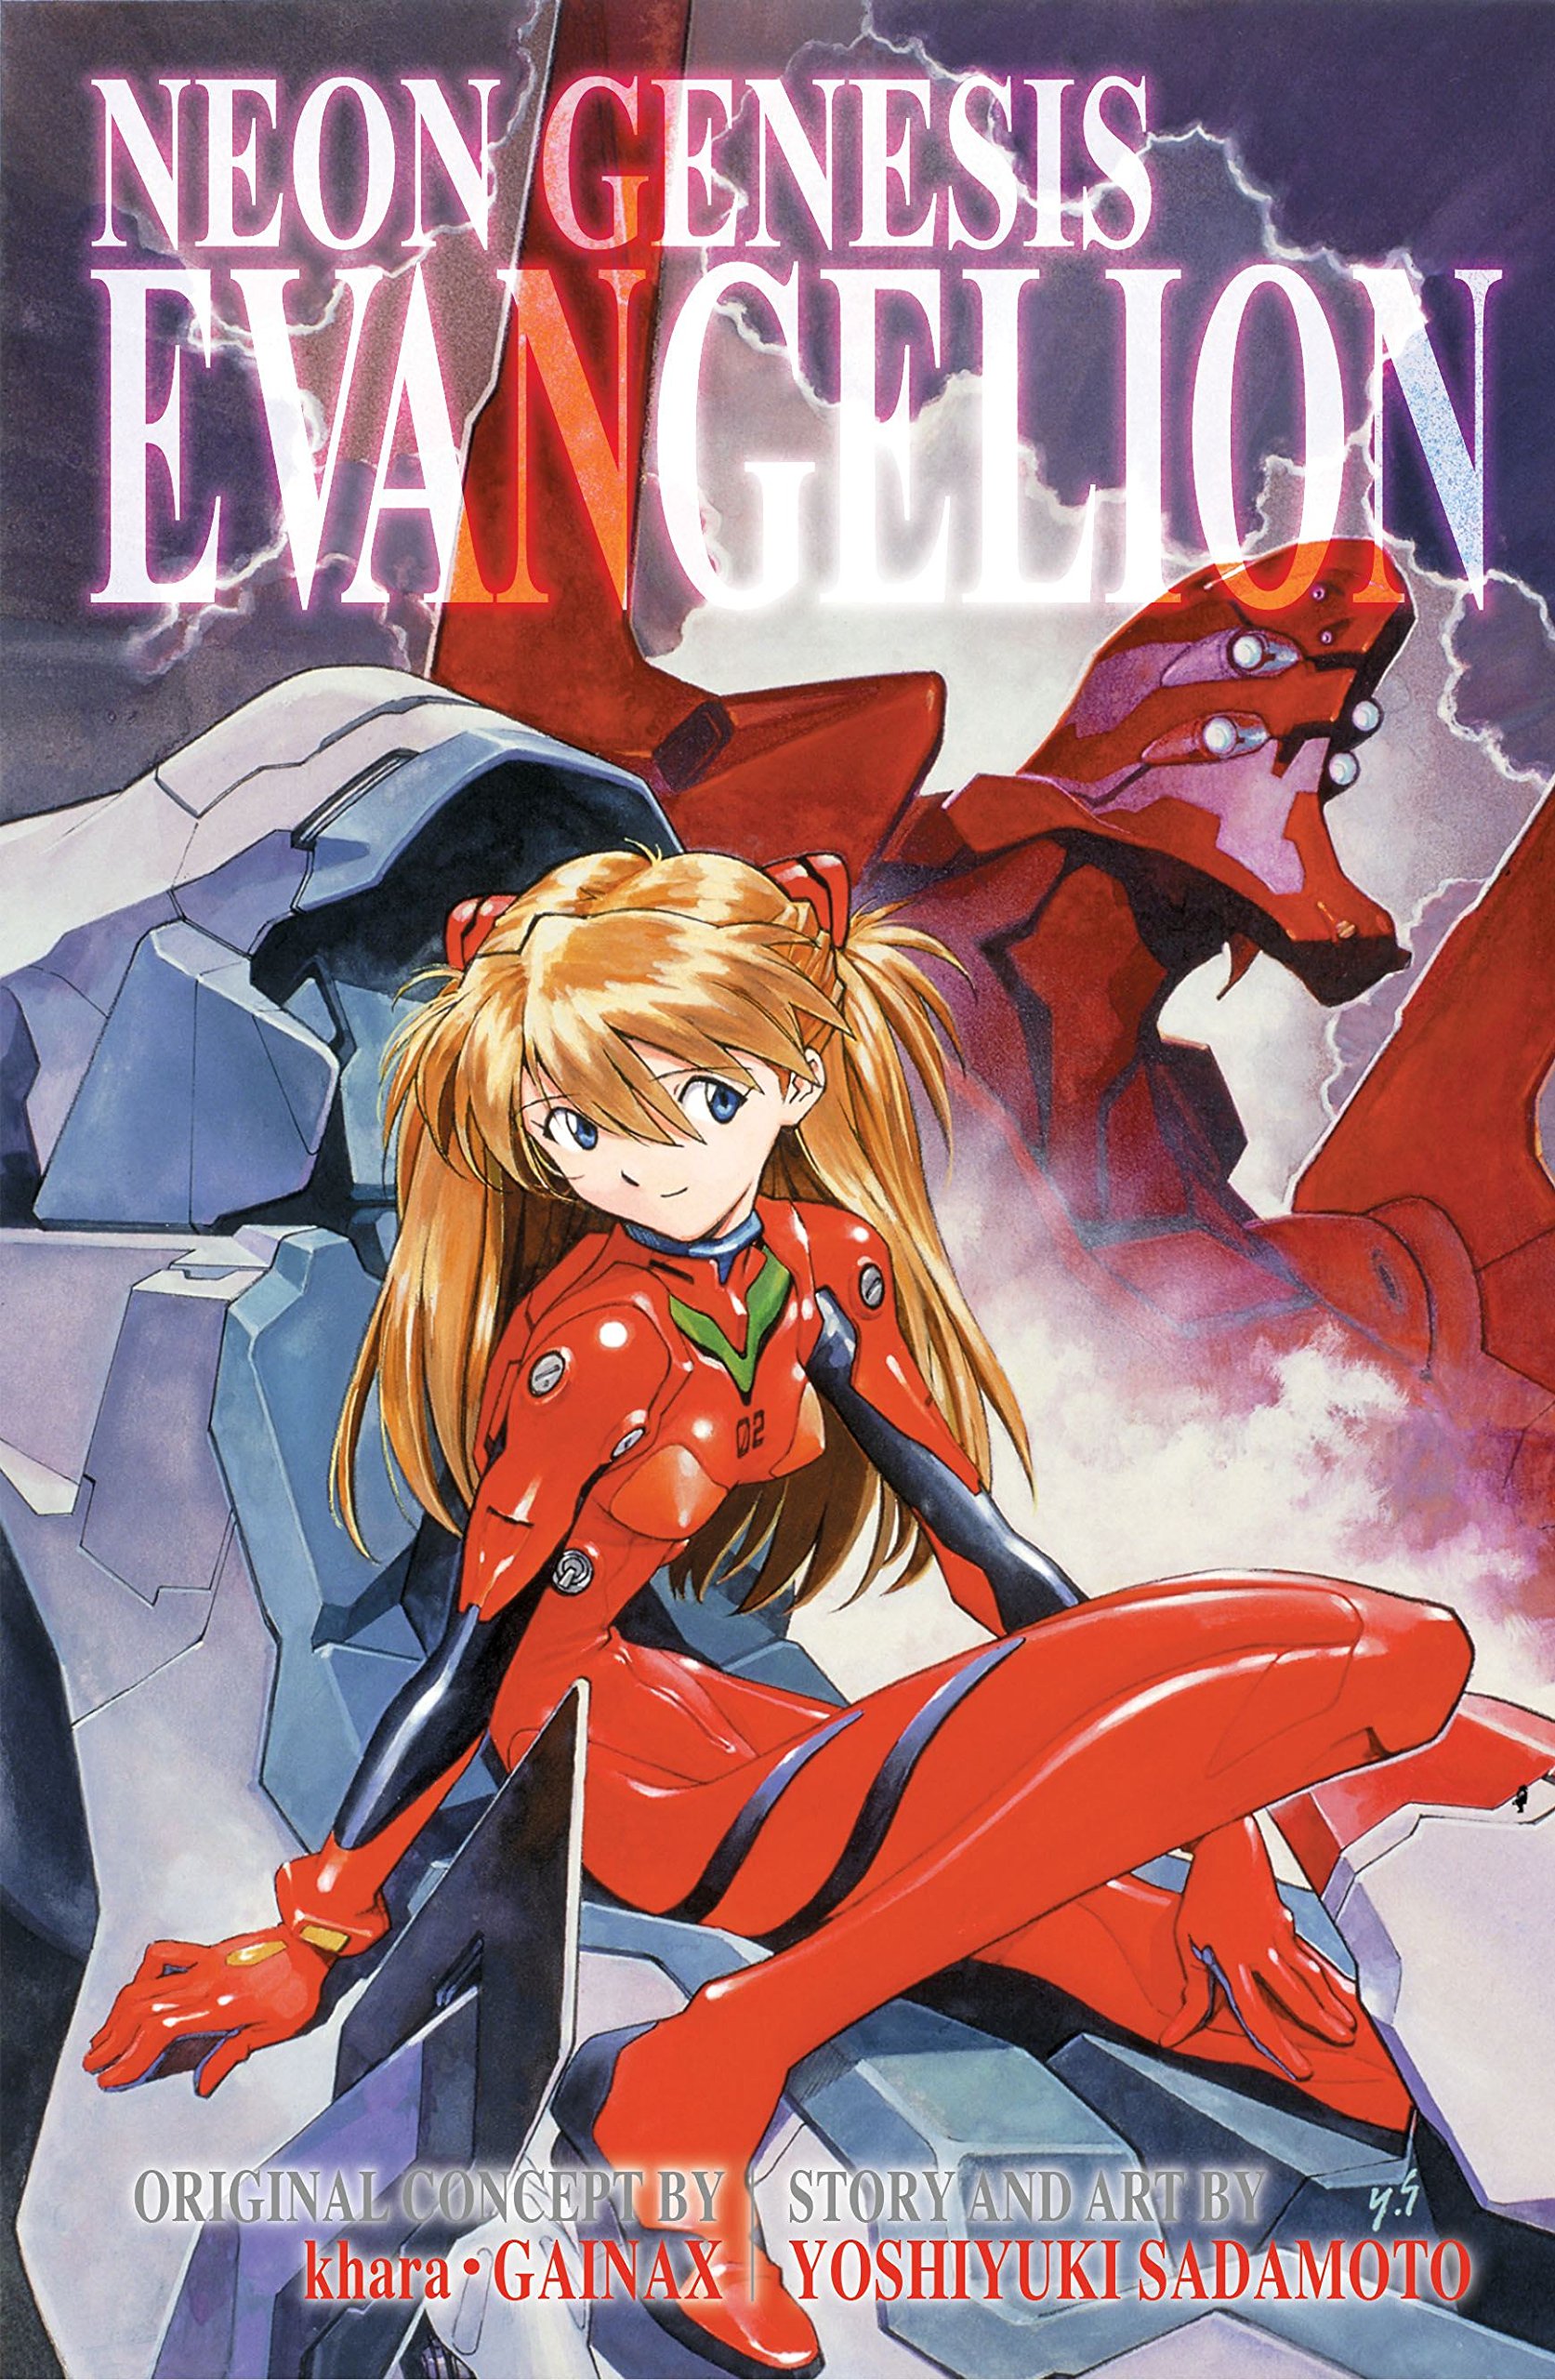 The Classic Mecha Anime Neon Genesis Evangelion Will Come To Netflix Next  Year